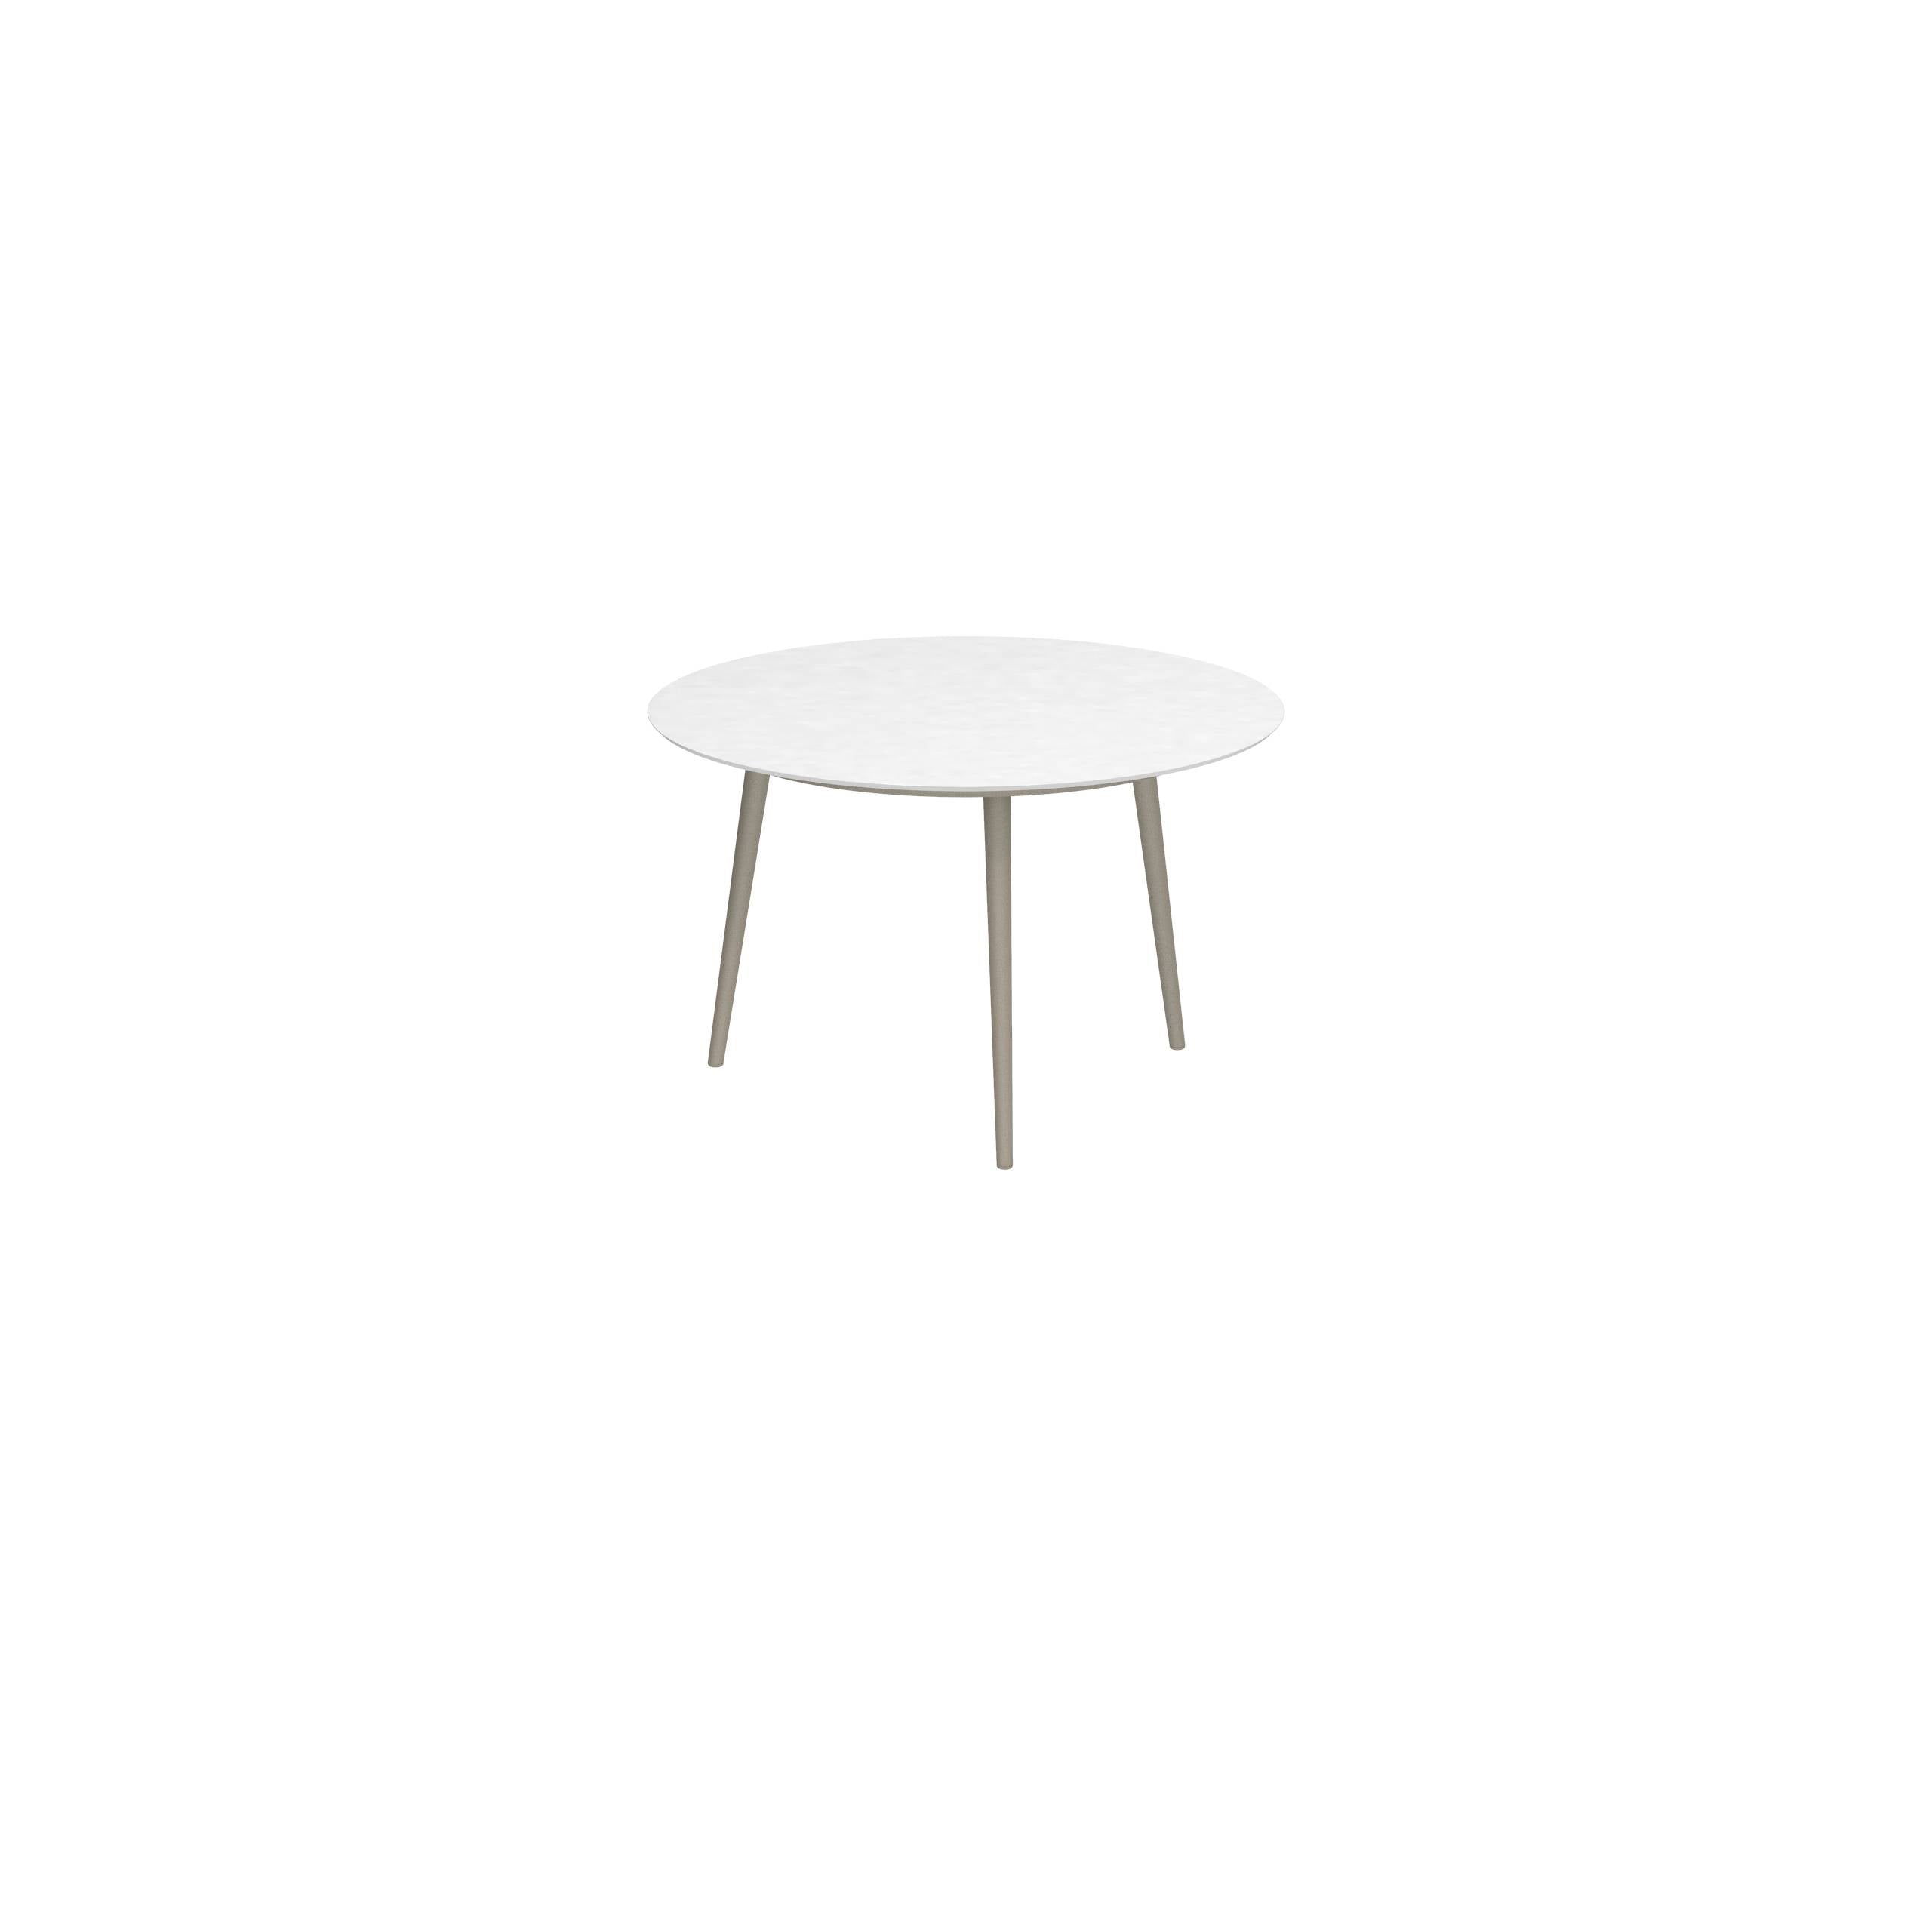 Styletto Standard Dining Table Ø 120cm Alu Legs Sand Ceramic Top White